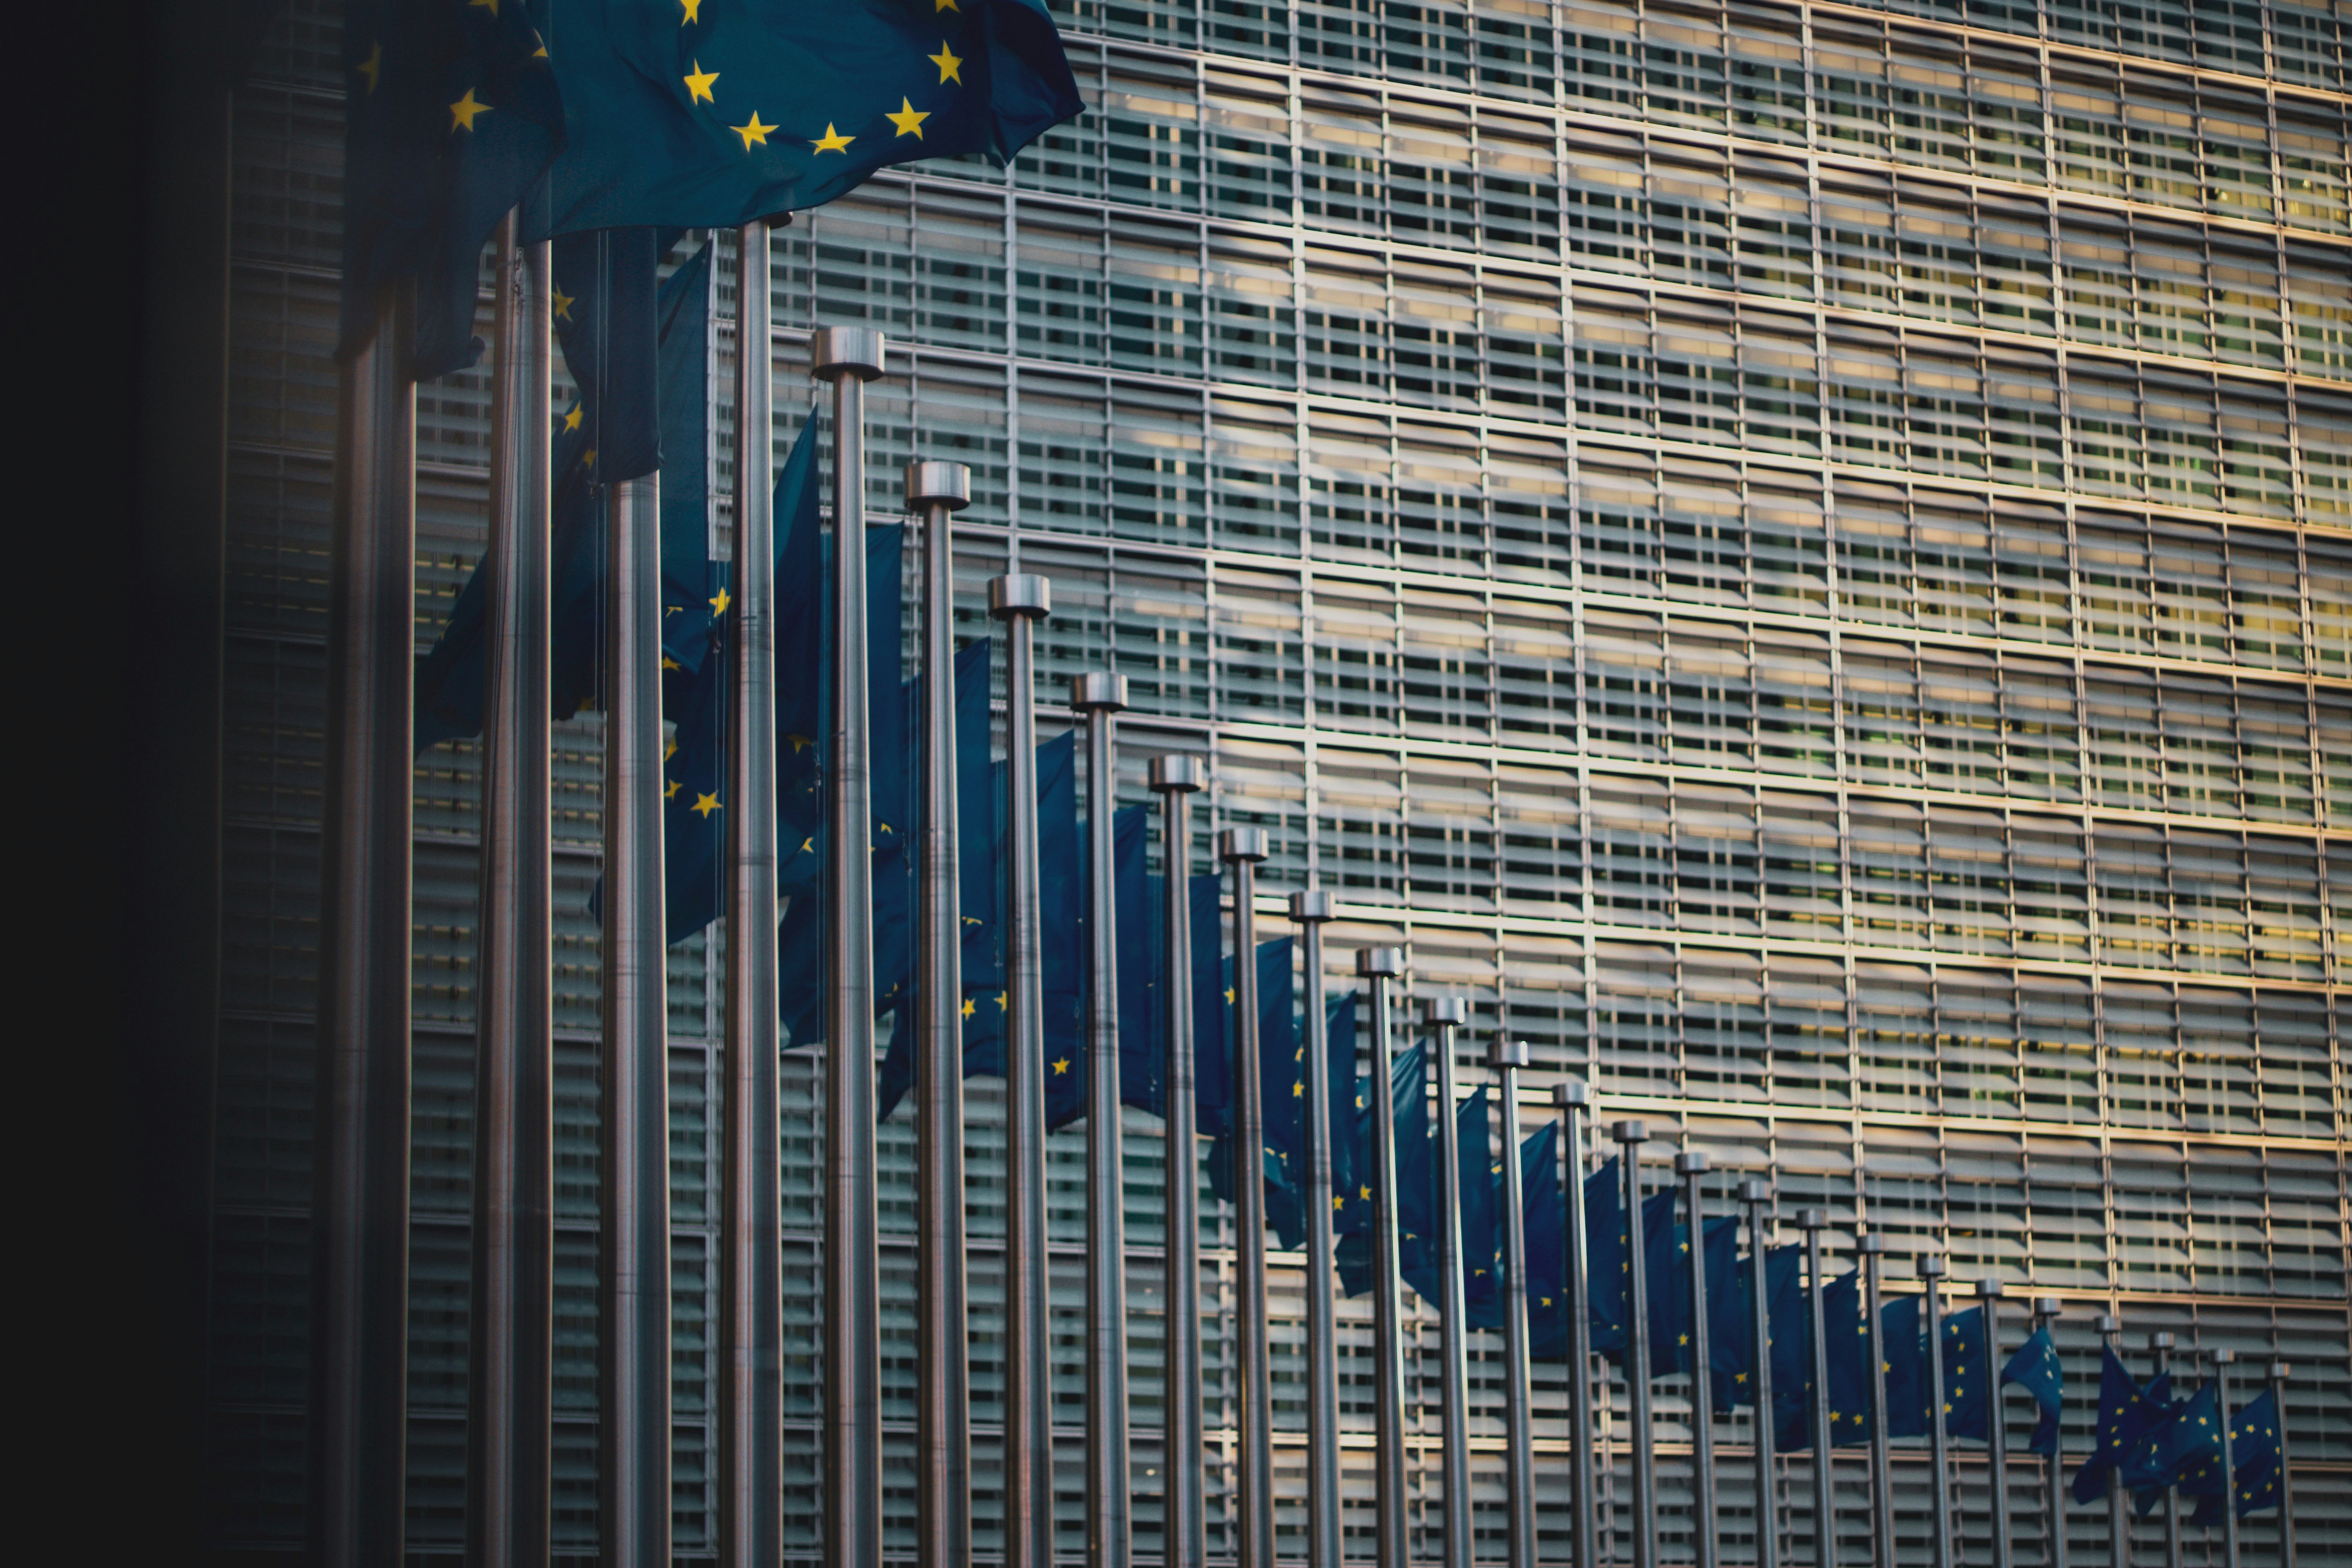 EU flags hanging outside European Parliament